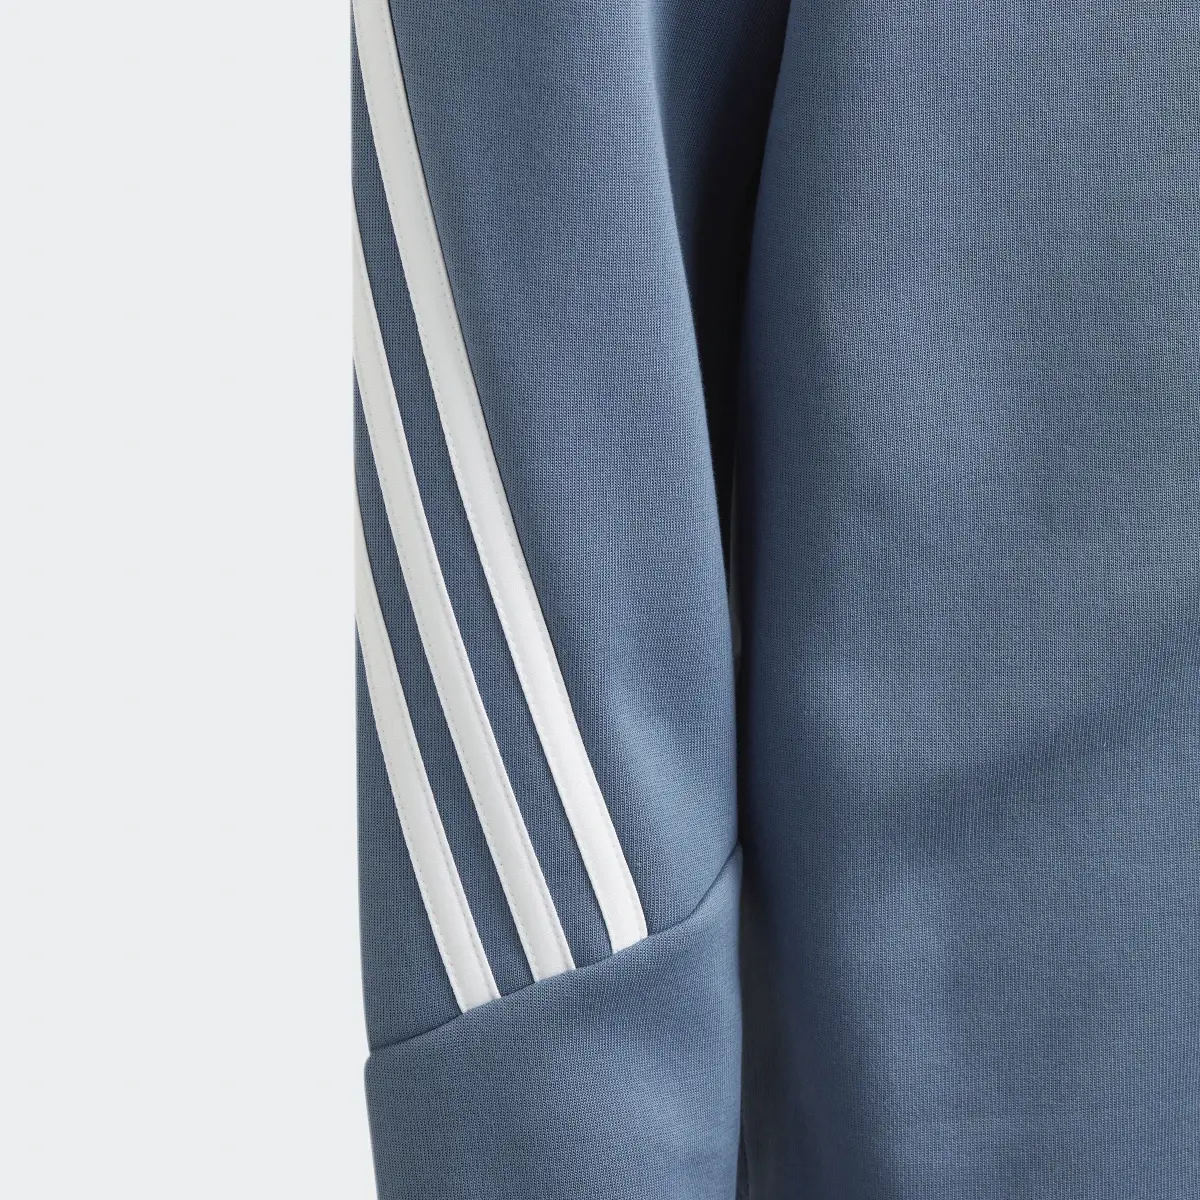 Adidas Future Icons 3-Stripes Full-Zip Hoodie. 3